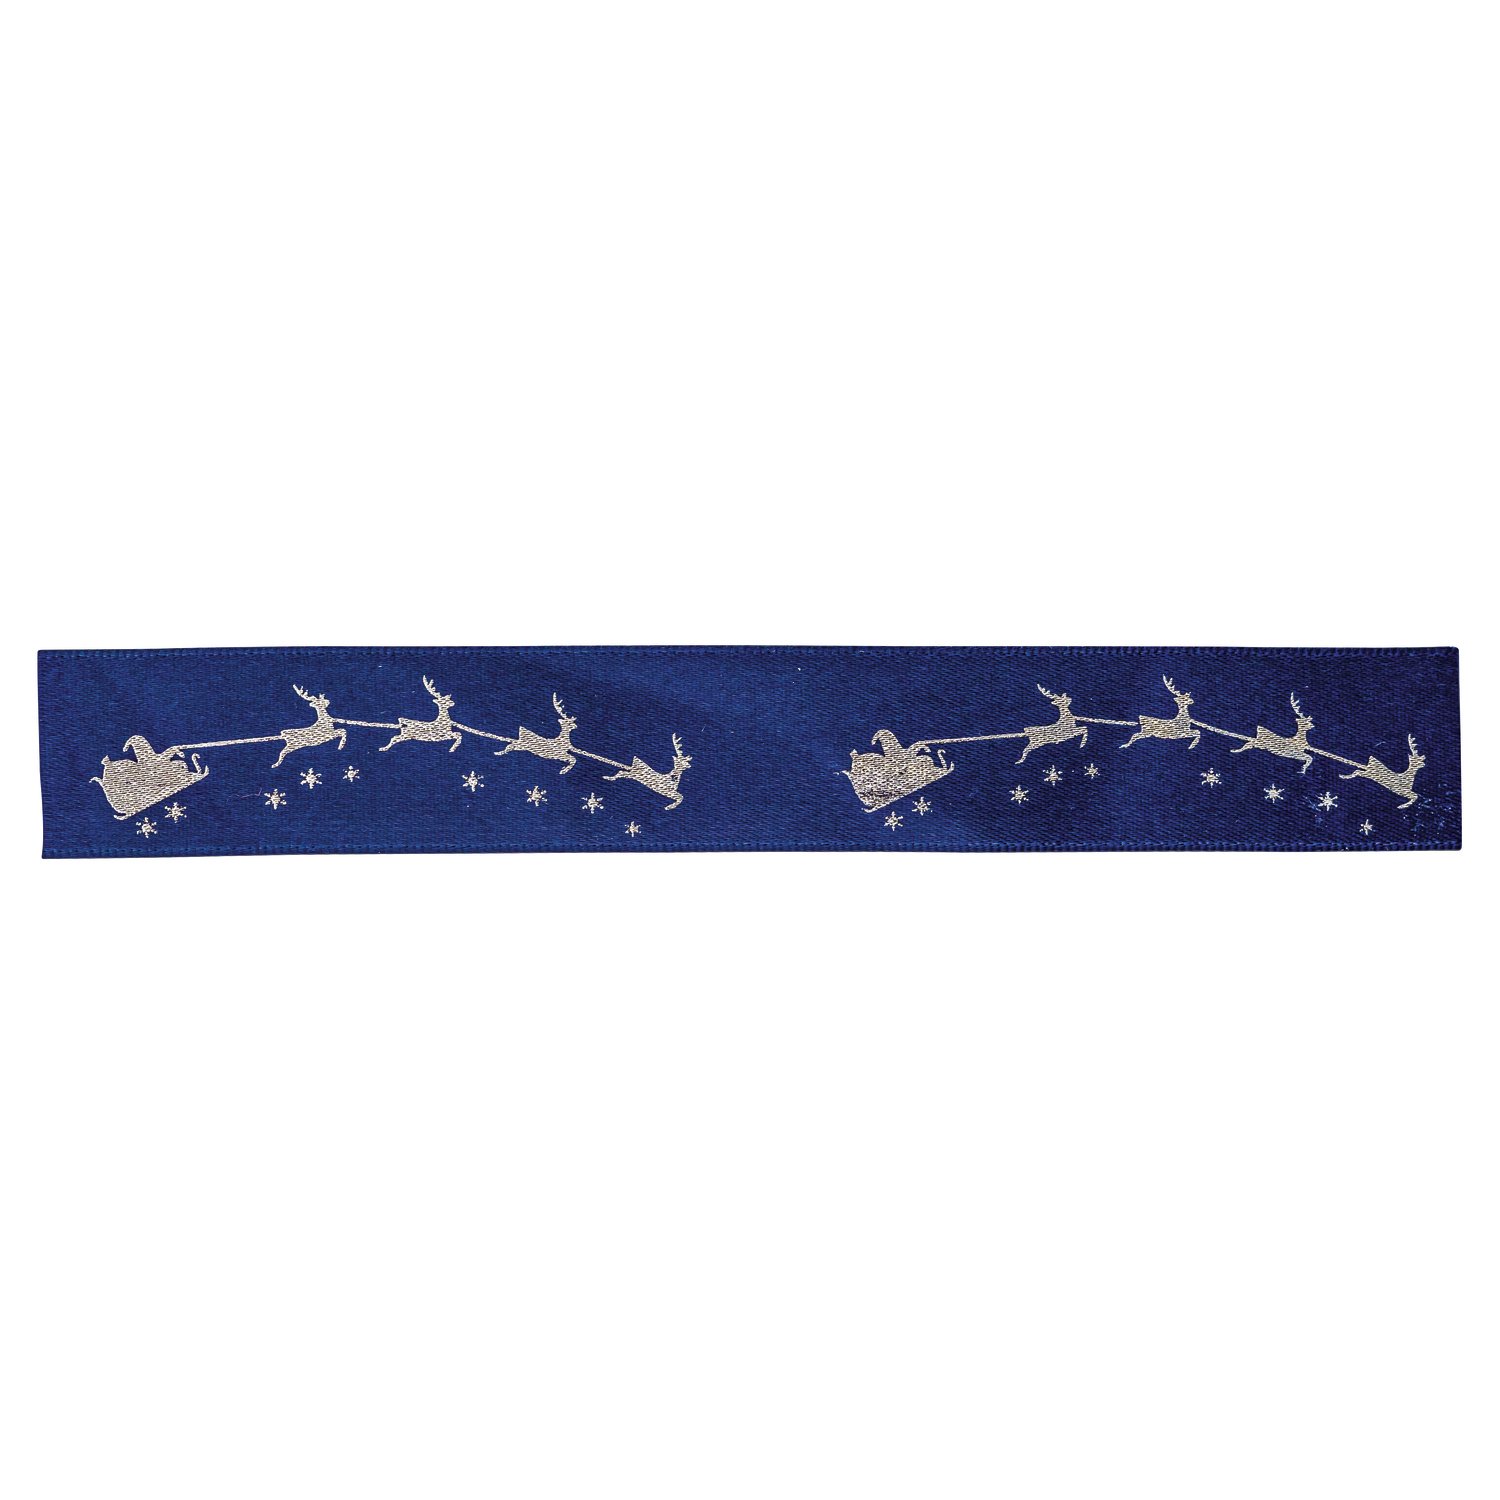 Midnight blue single faced satin ribbon with Santa on sleigh design - 23mmx25m